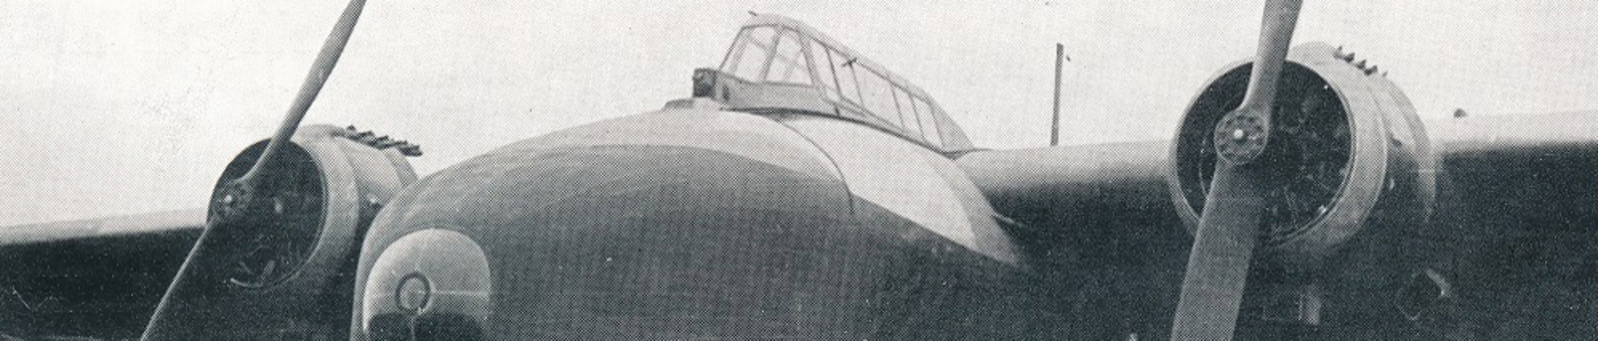 General Aircraft GAL58 Hamilcar X